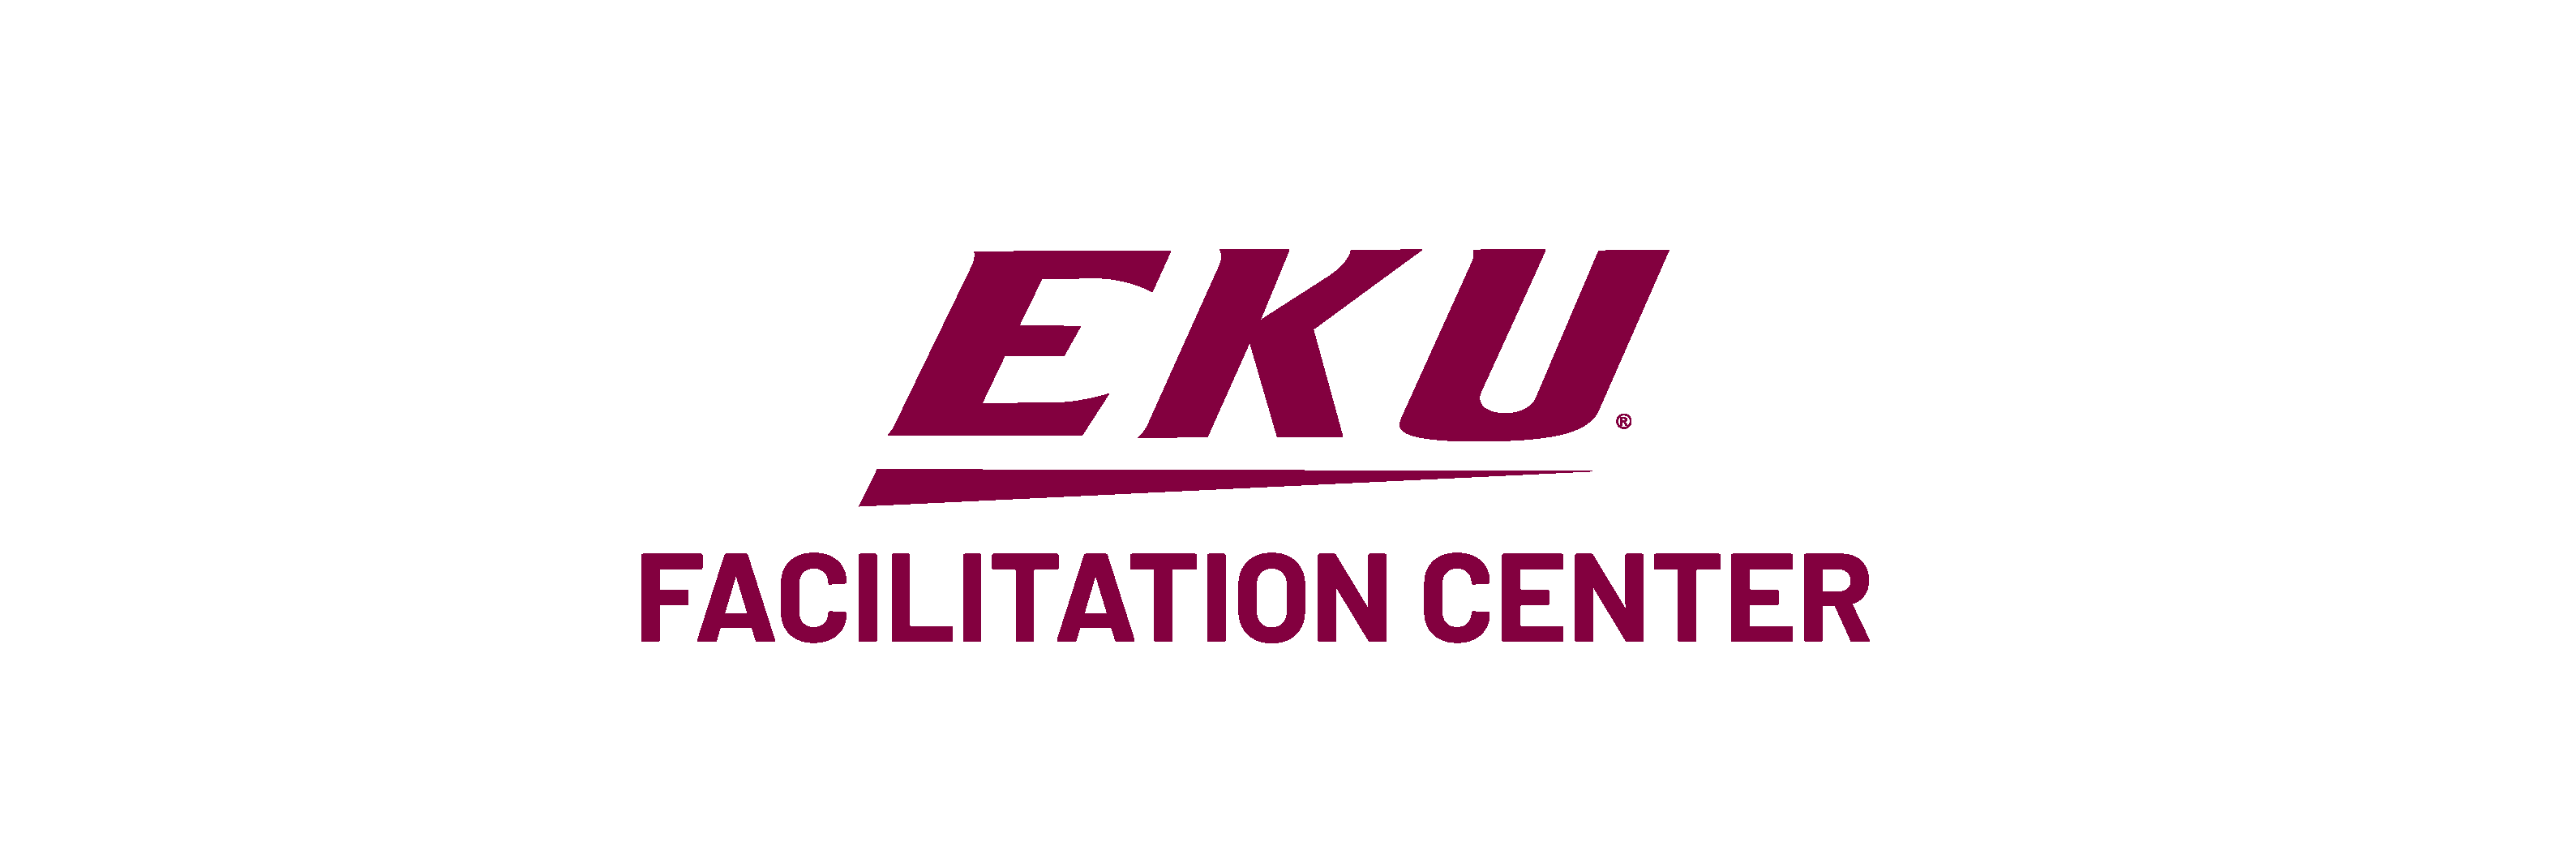 Facilitation Center at Eastern Kentucky University